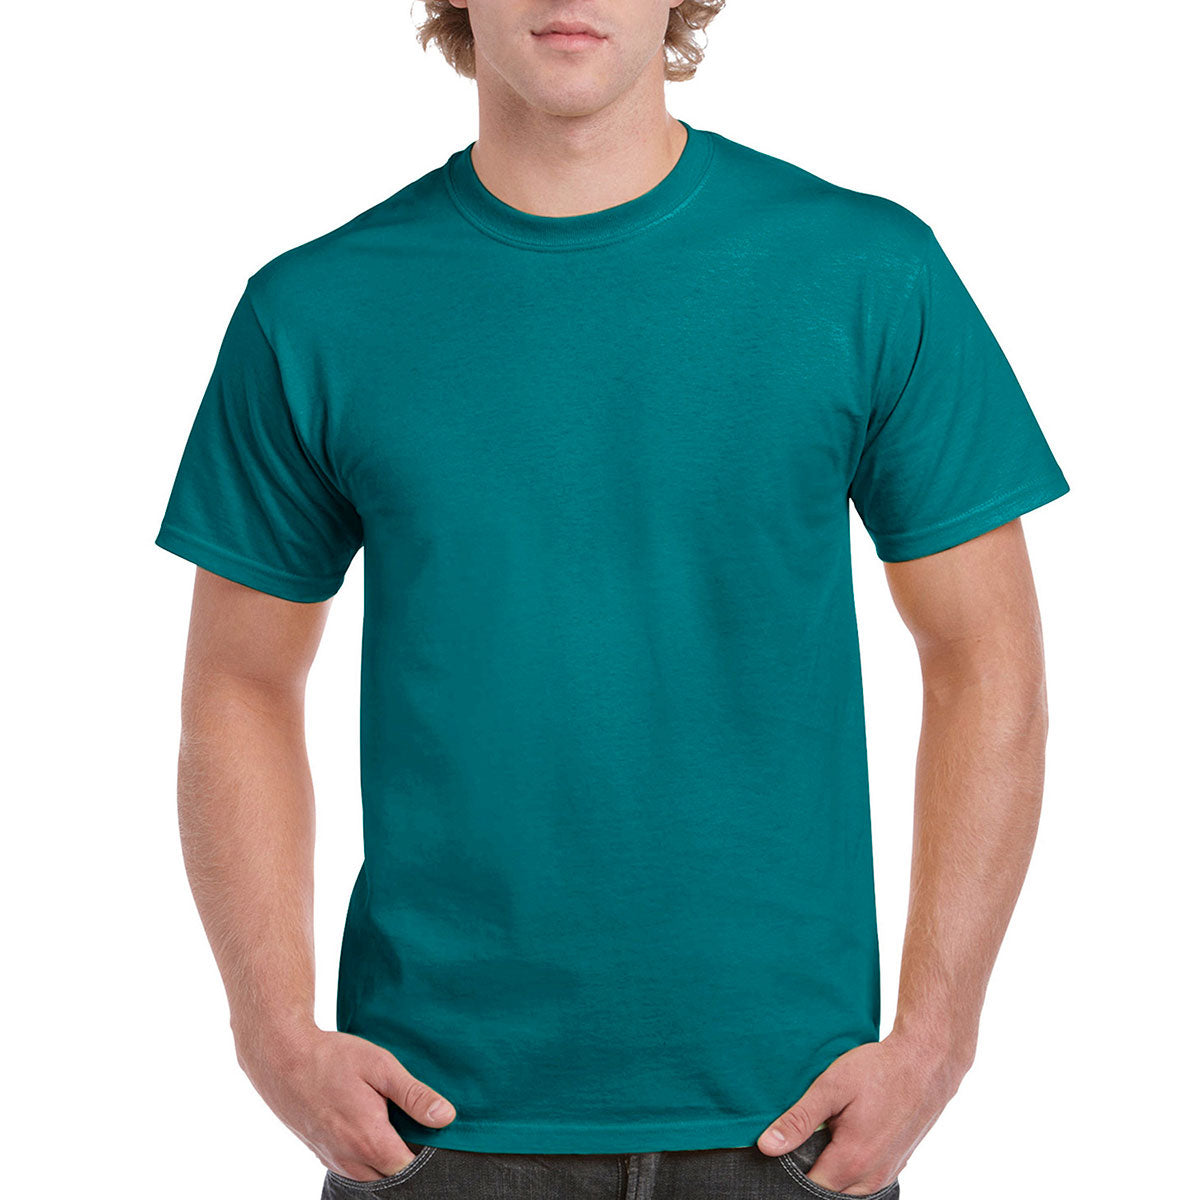 Buy Blue Shirts for Men by Hubberholme Online